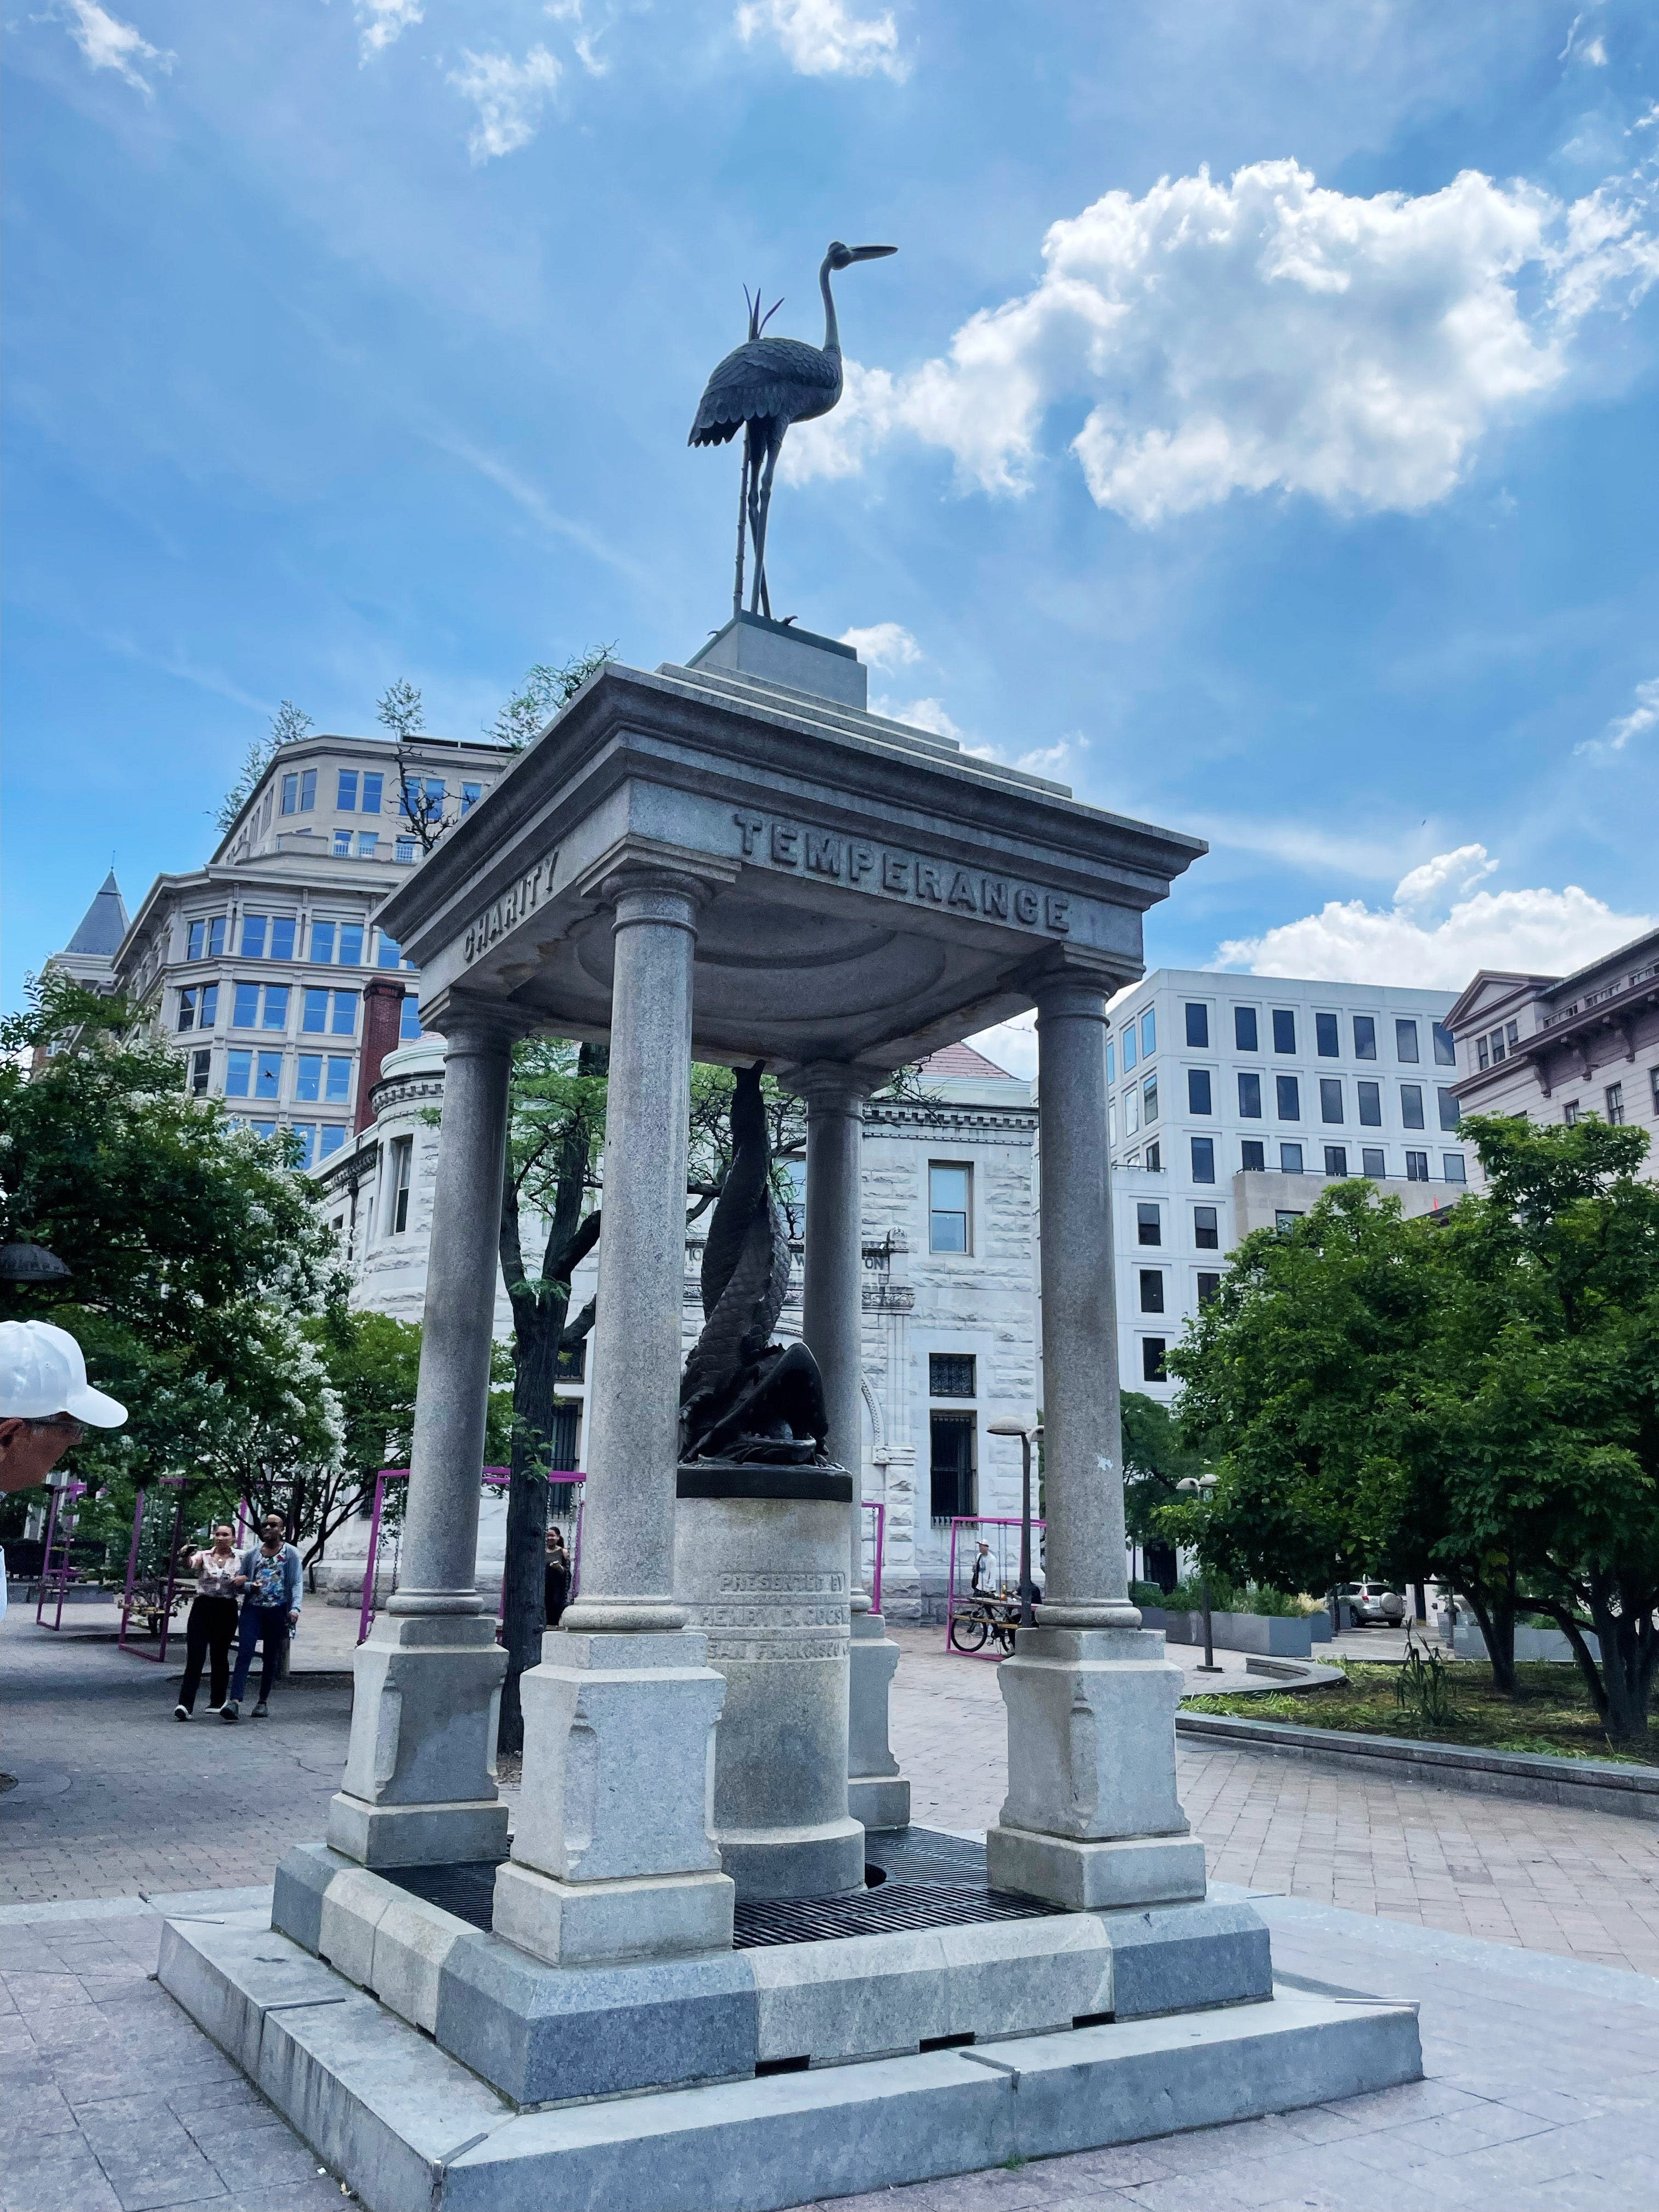 The ‘monstrosity of art’ fountain in DC for teetotalers: Local hidden gem